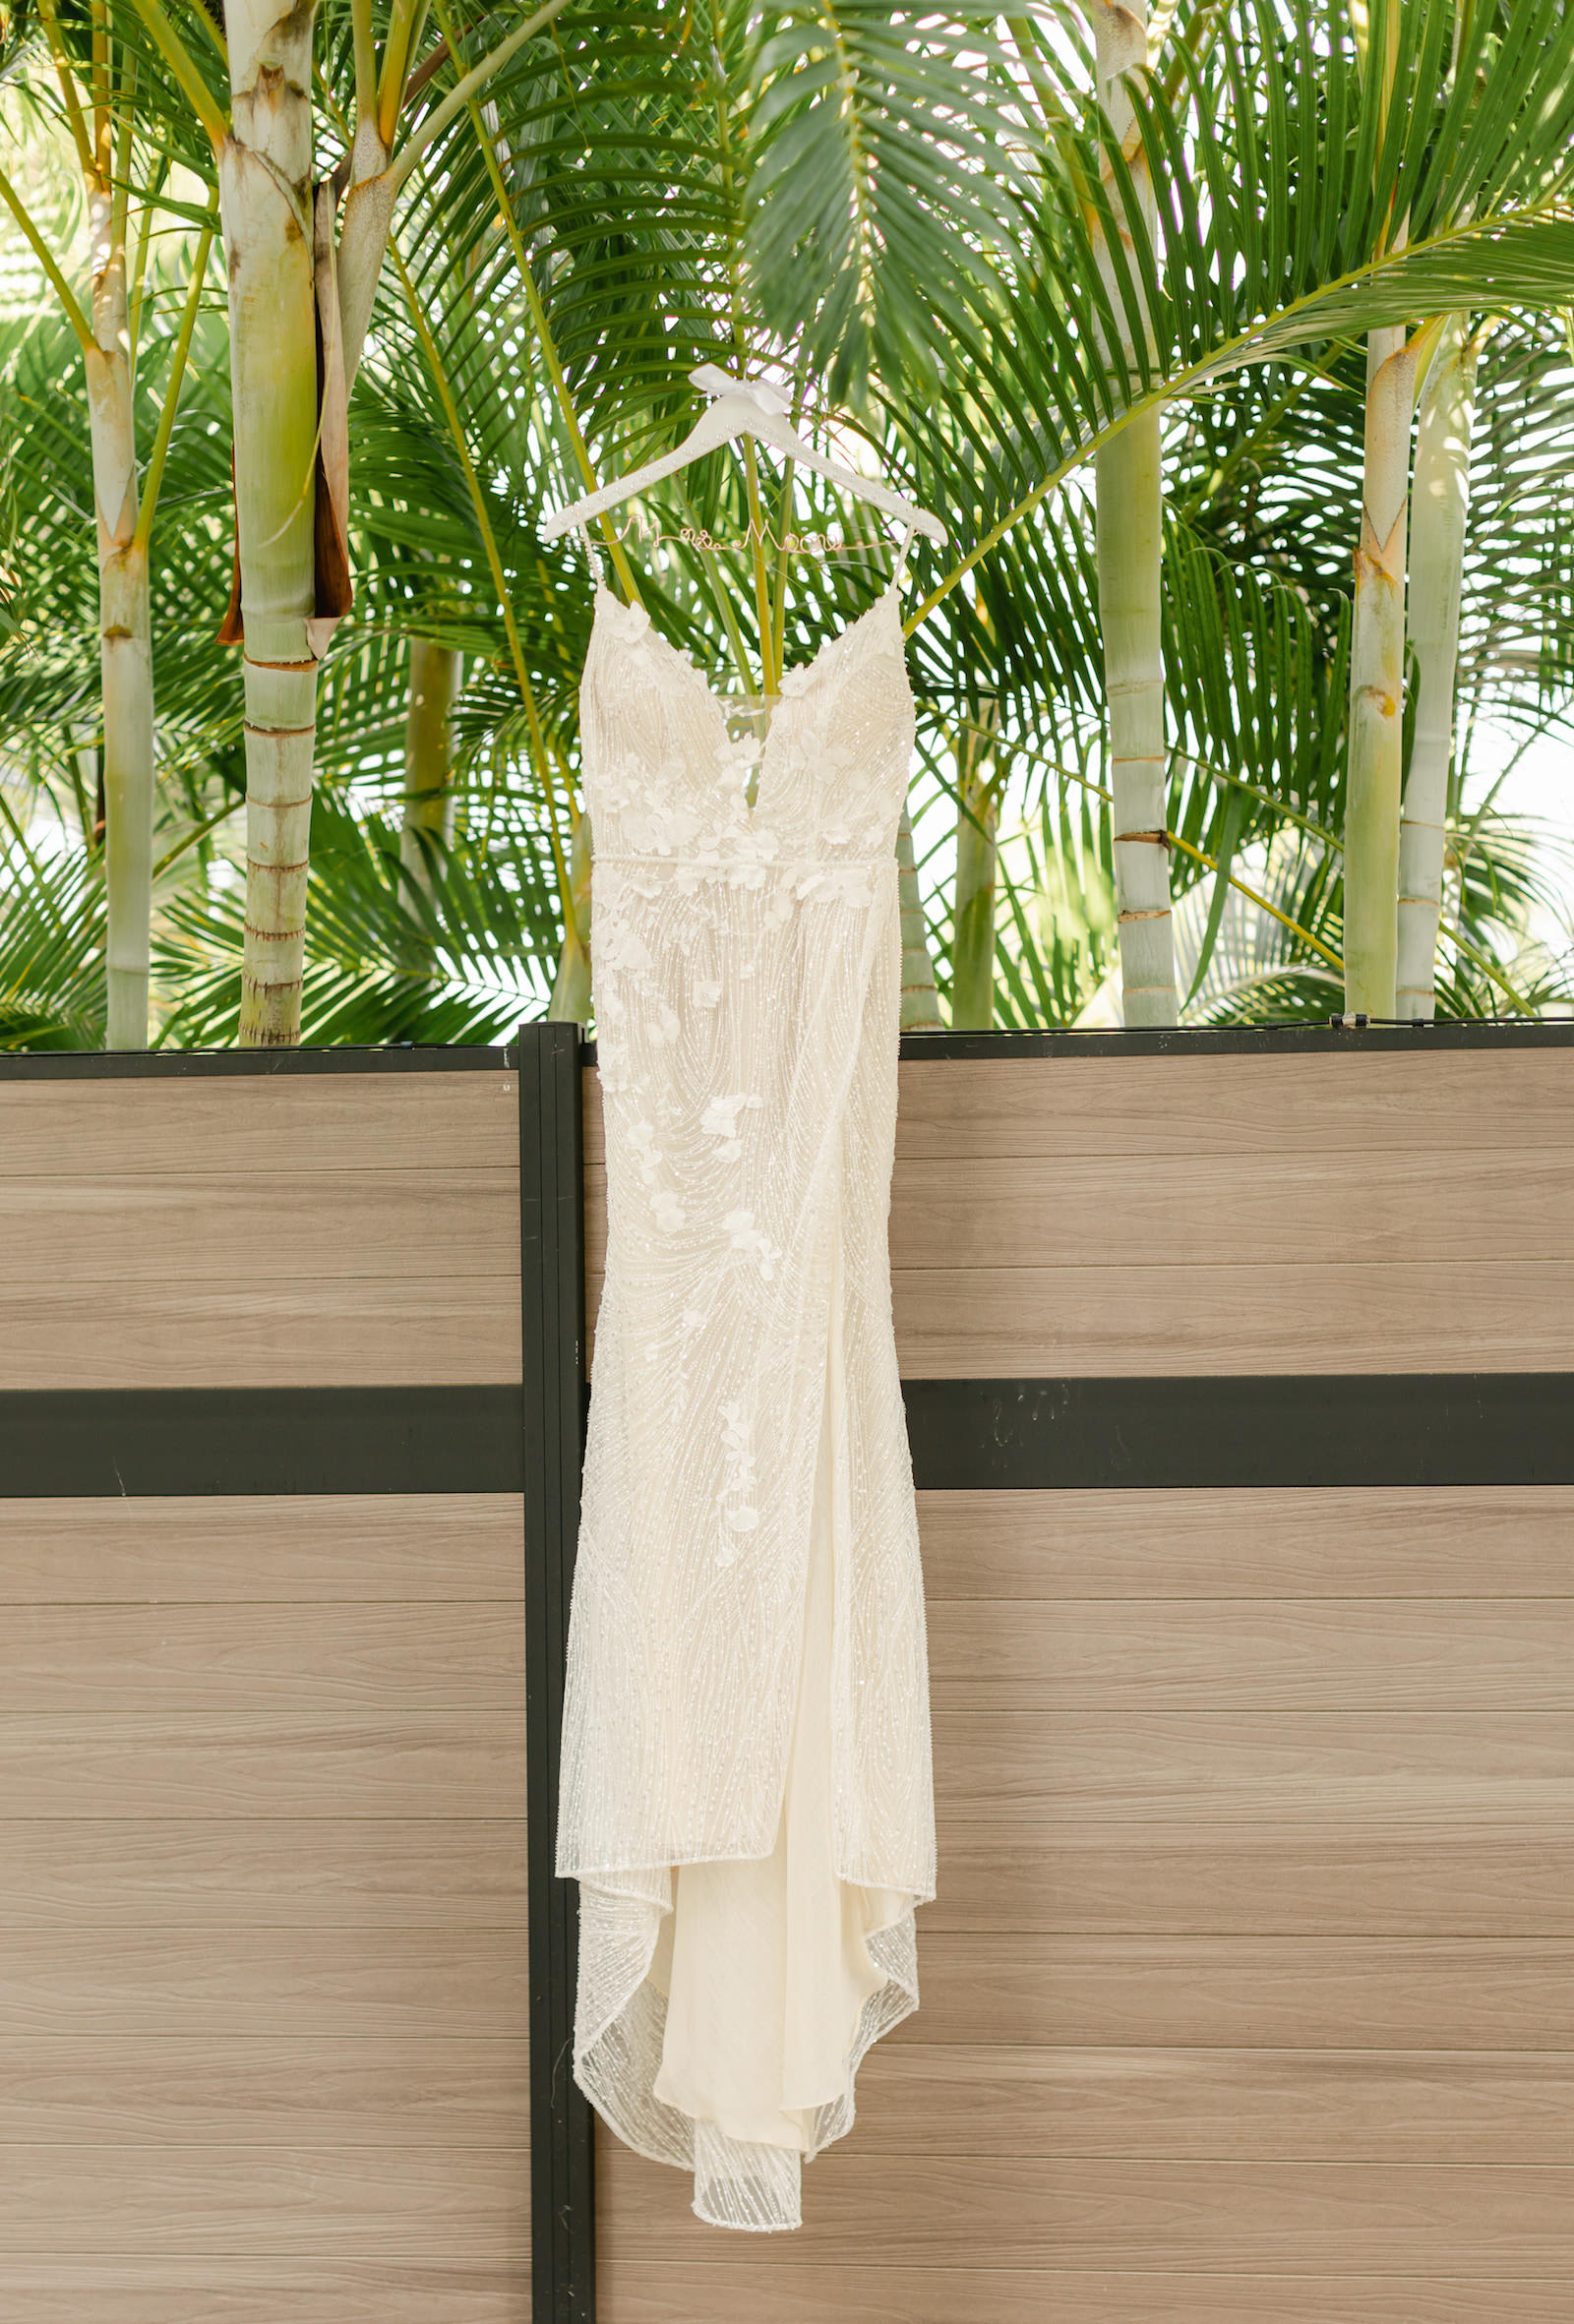 Tropical Modern Wedding, Lace Wedding Dress Hanging on Palm Trees